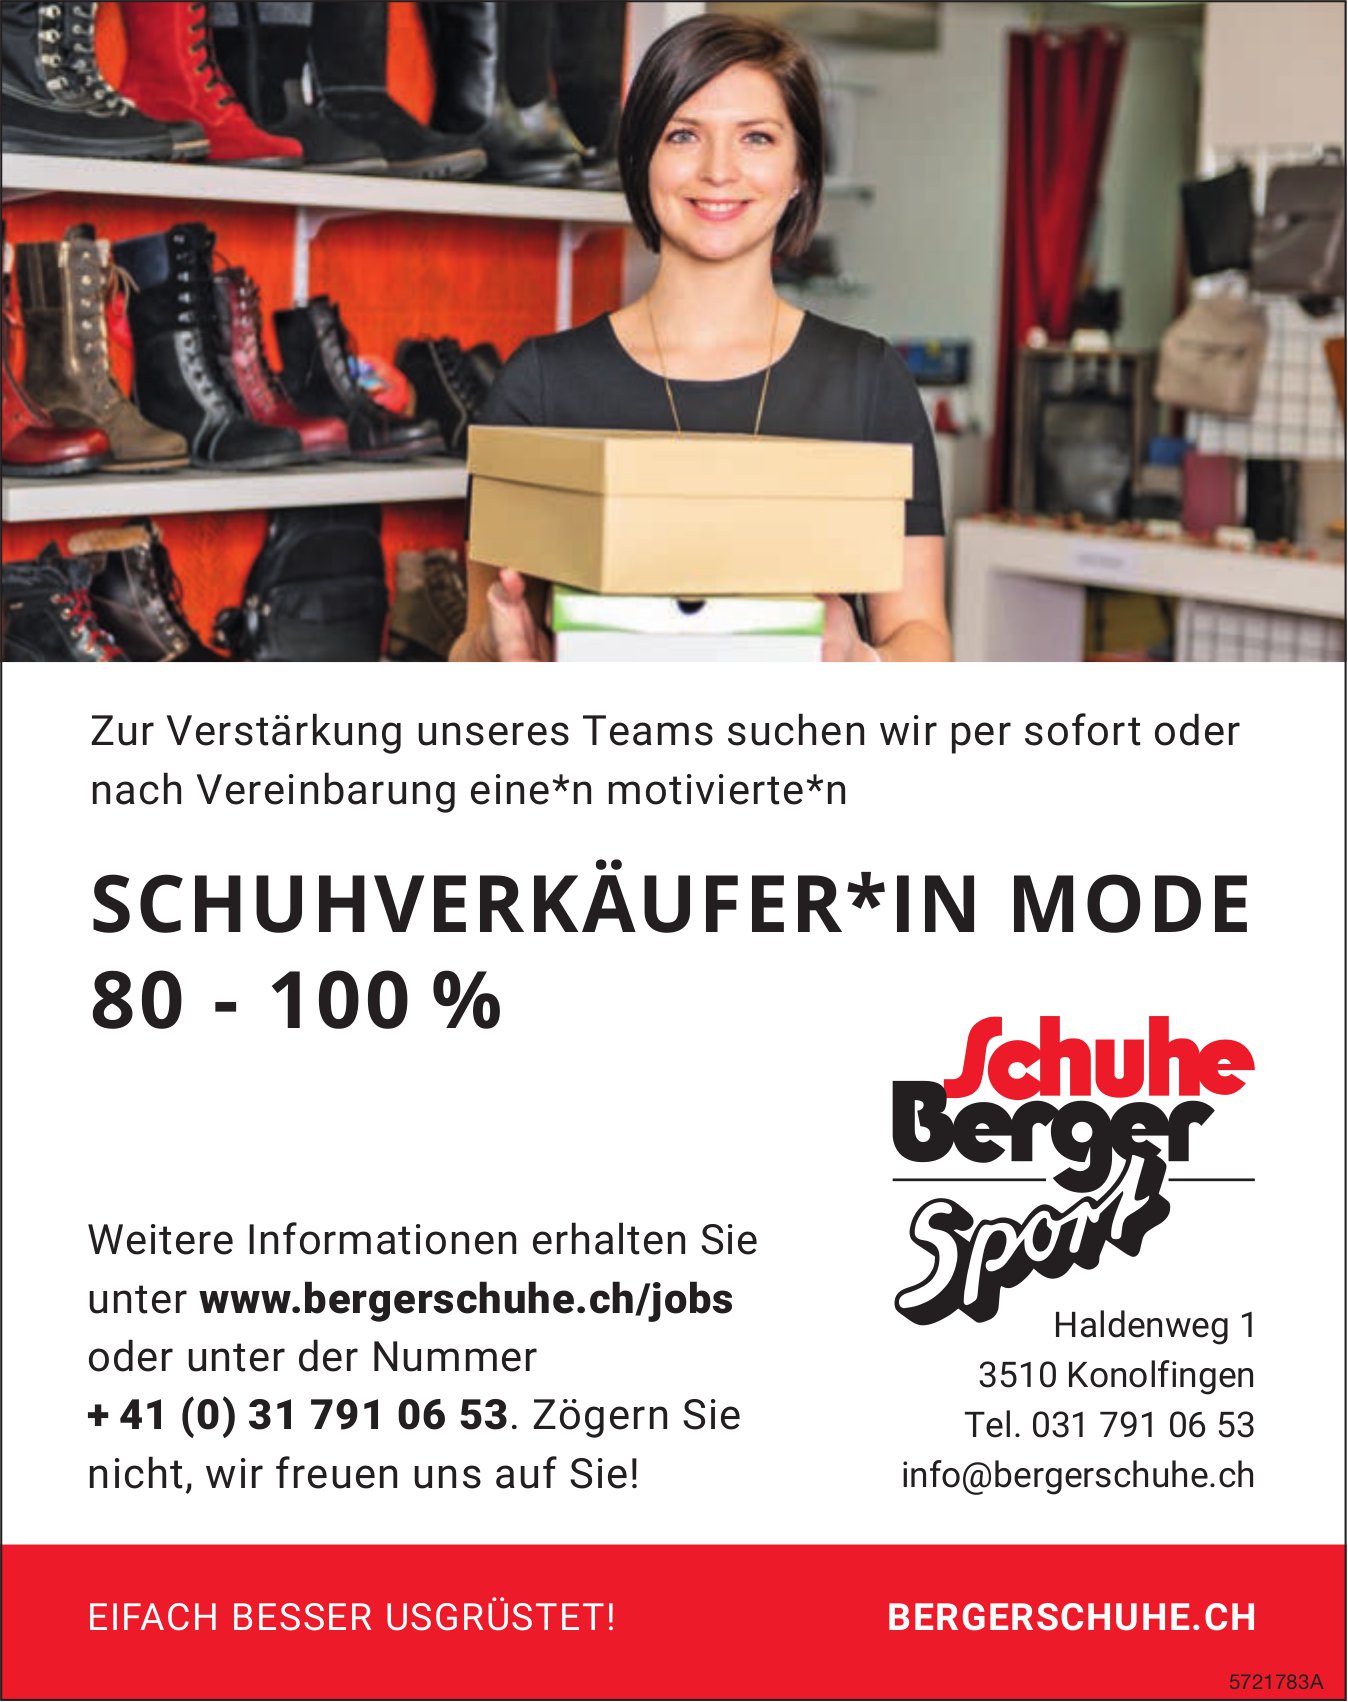 Schuhverkäufer*in Mode 80-100%, Schuhe Berger Sport, Konolfingen, gesucht